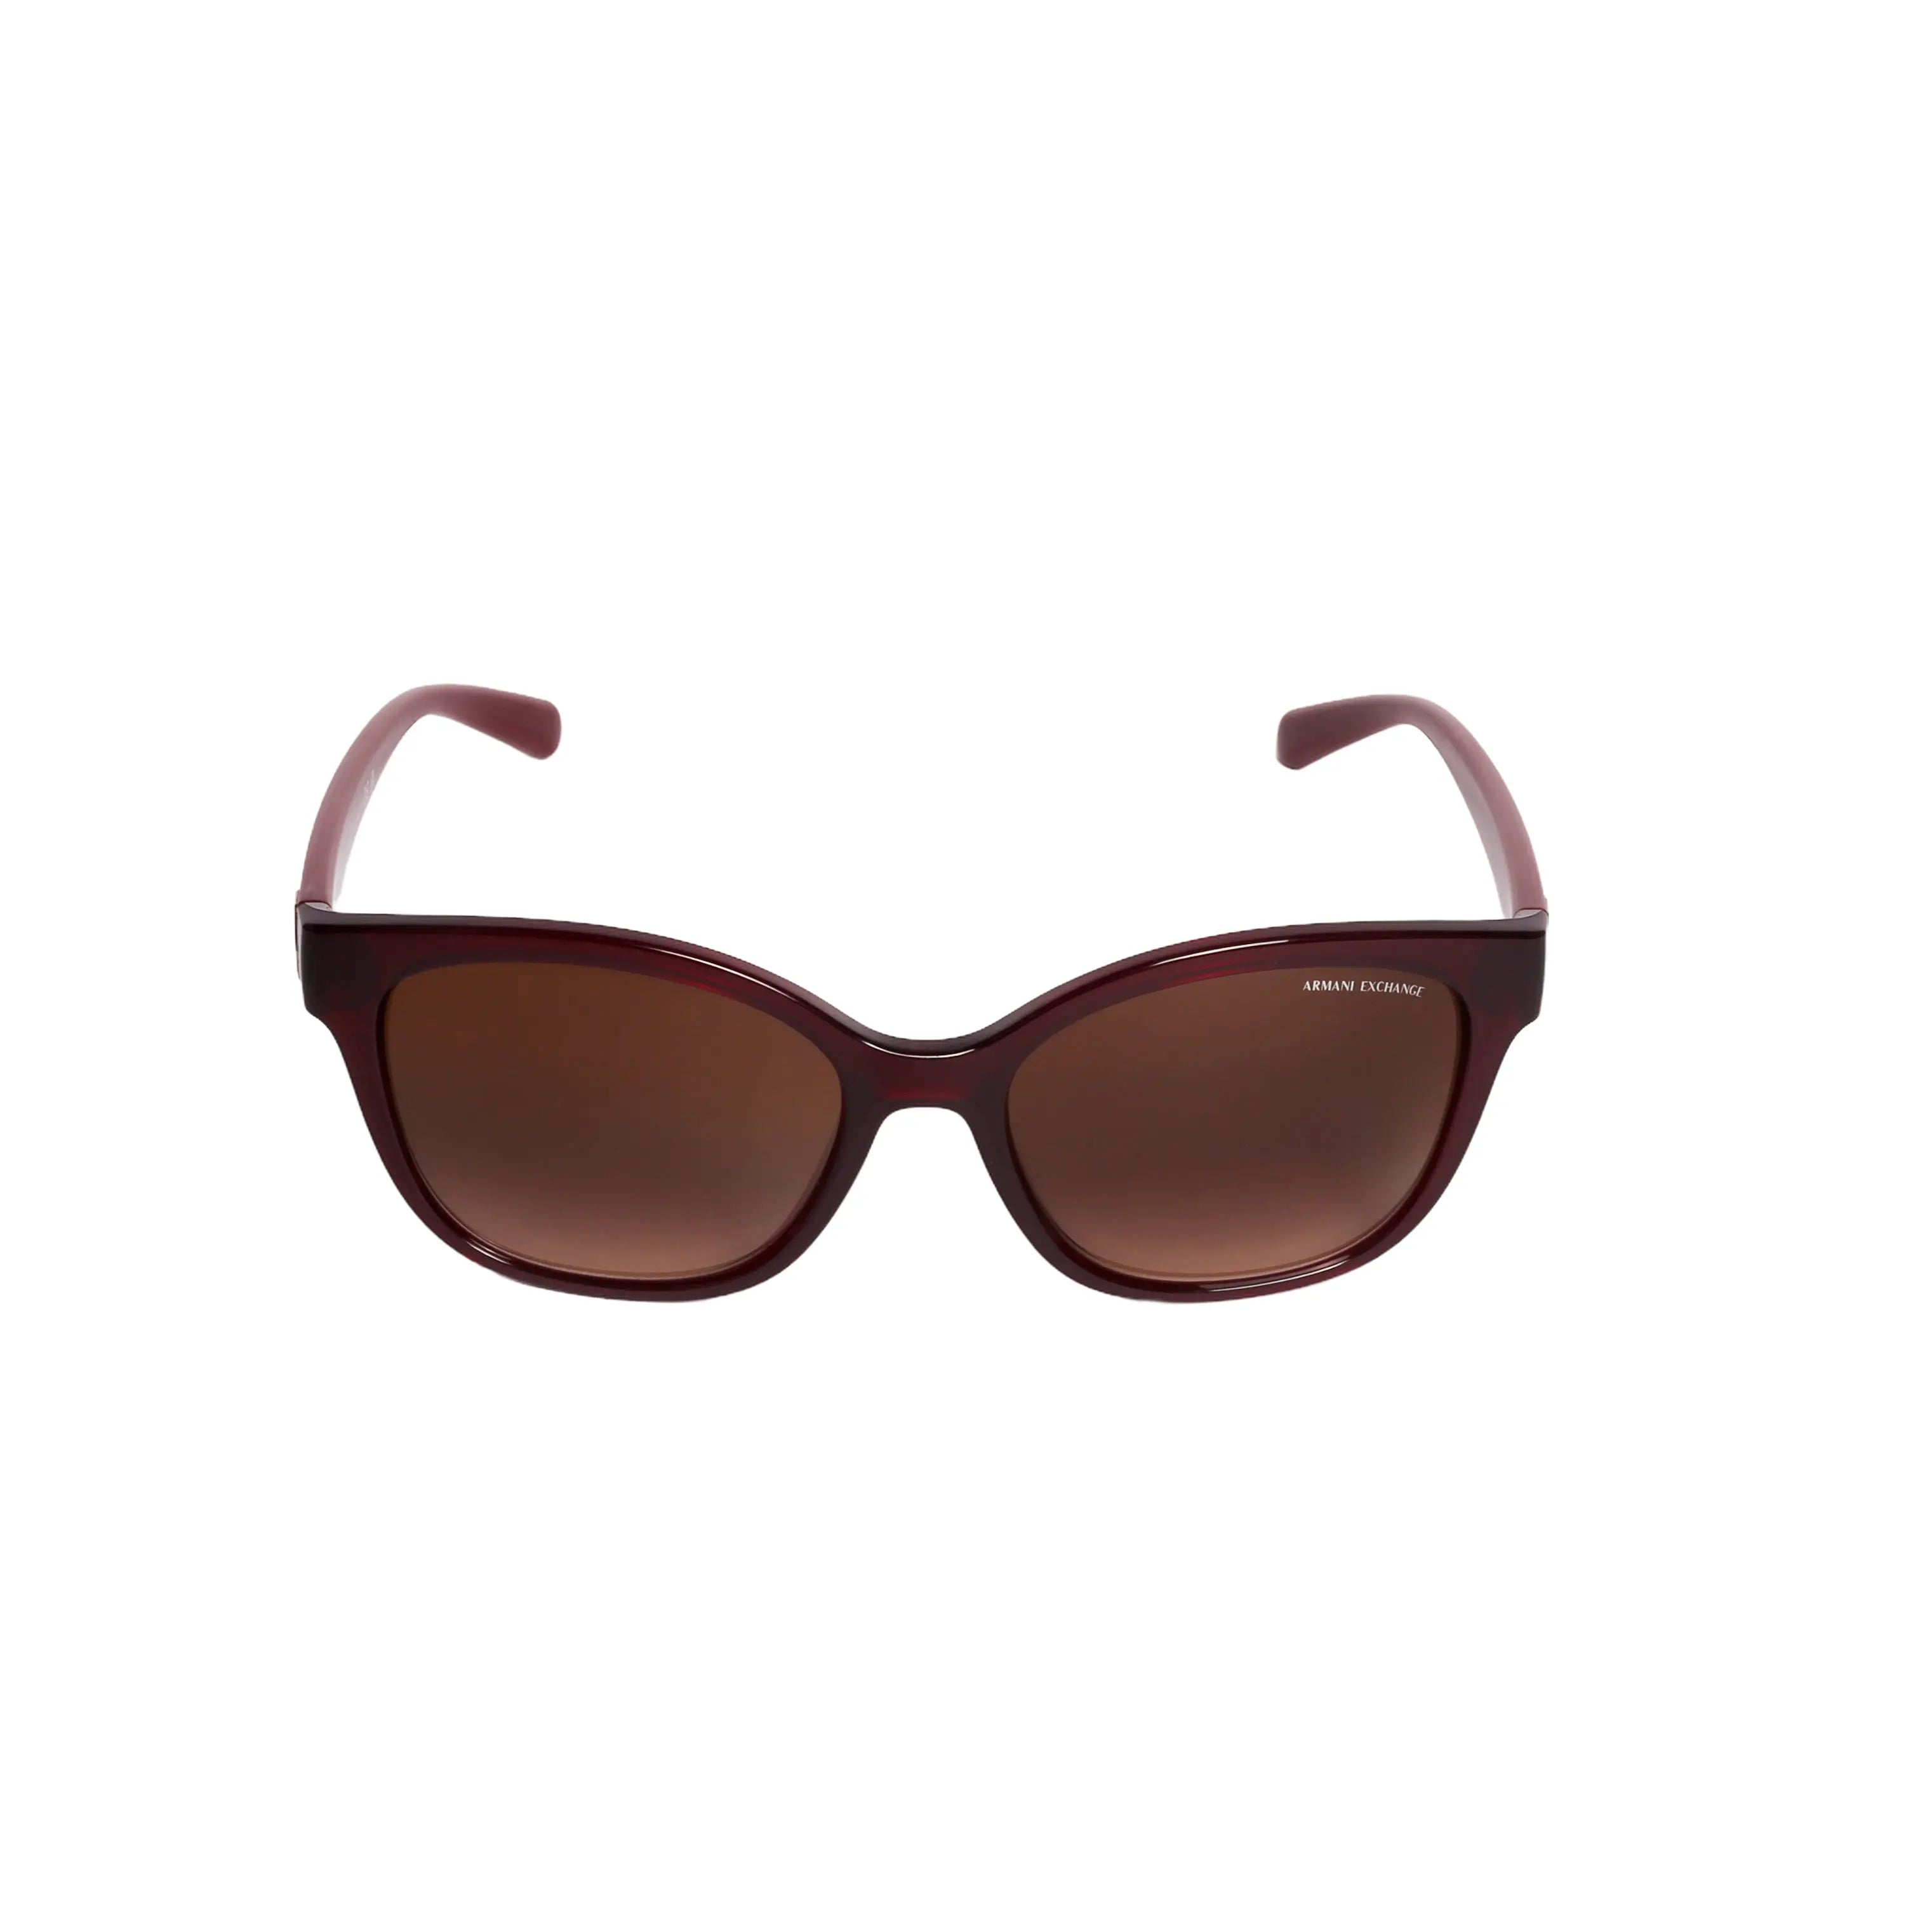 Armani Exchange-AX 4127-55-824 Sunglasses - Premium Sunglasses from Armani Exchange - Just Rs. 7990! Shop now at Laxmi Opticians